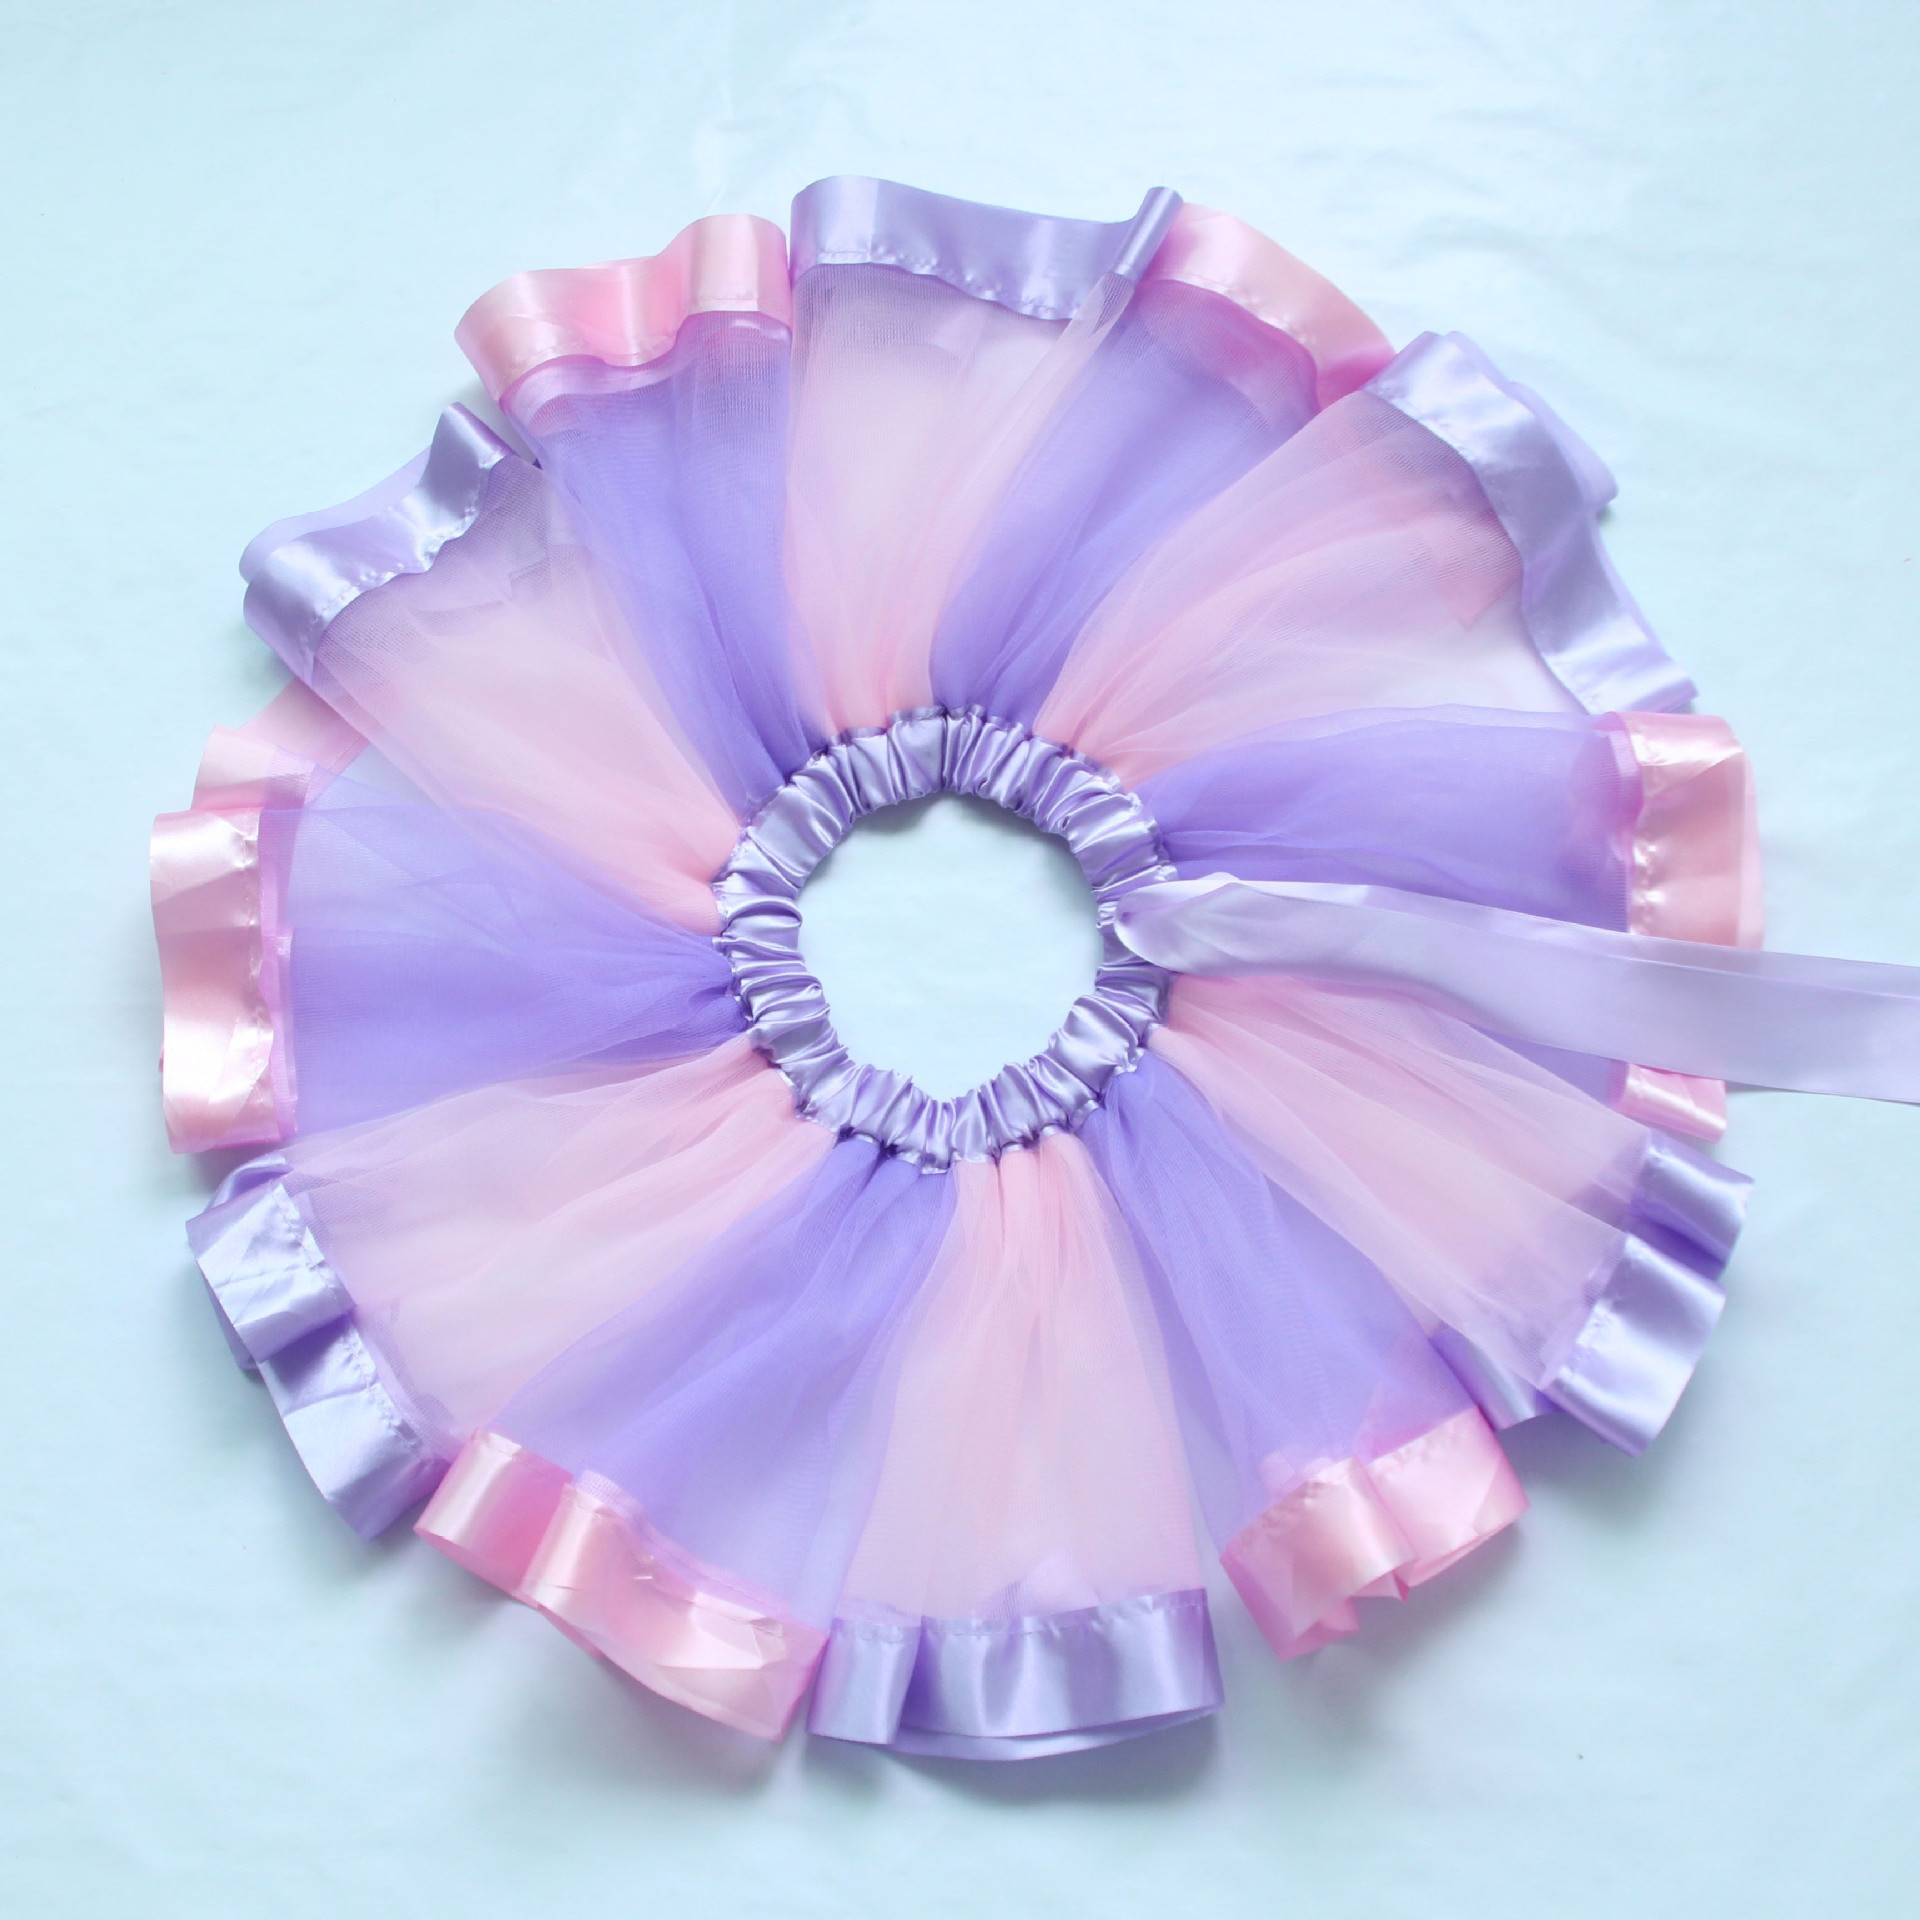 DIY Tutu Skirt For Toddler
 Girls Pettiskirt Baby DIY Tutu Net Yarn Skirts Pink Purple